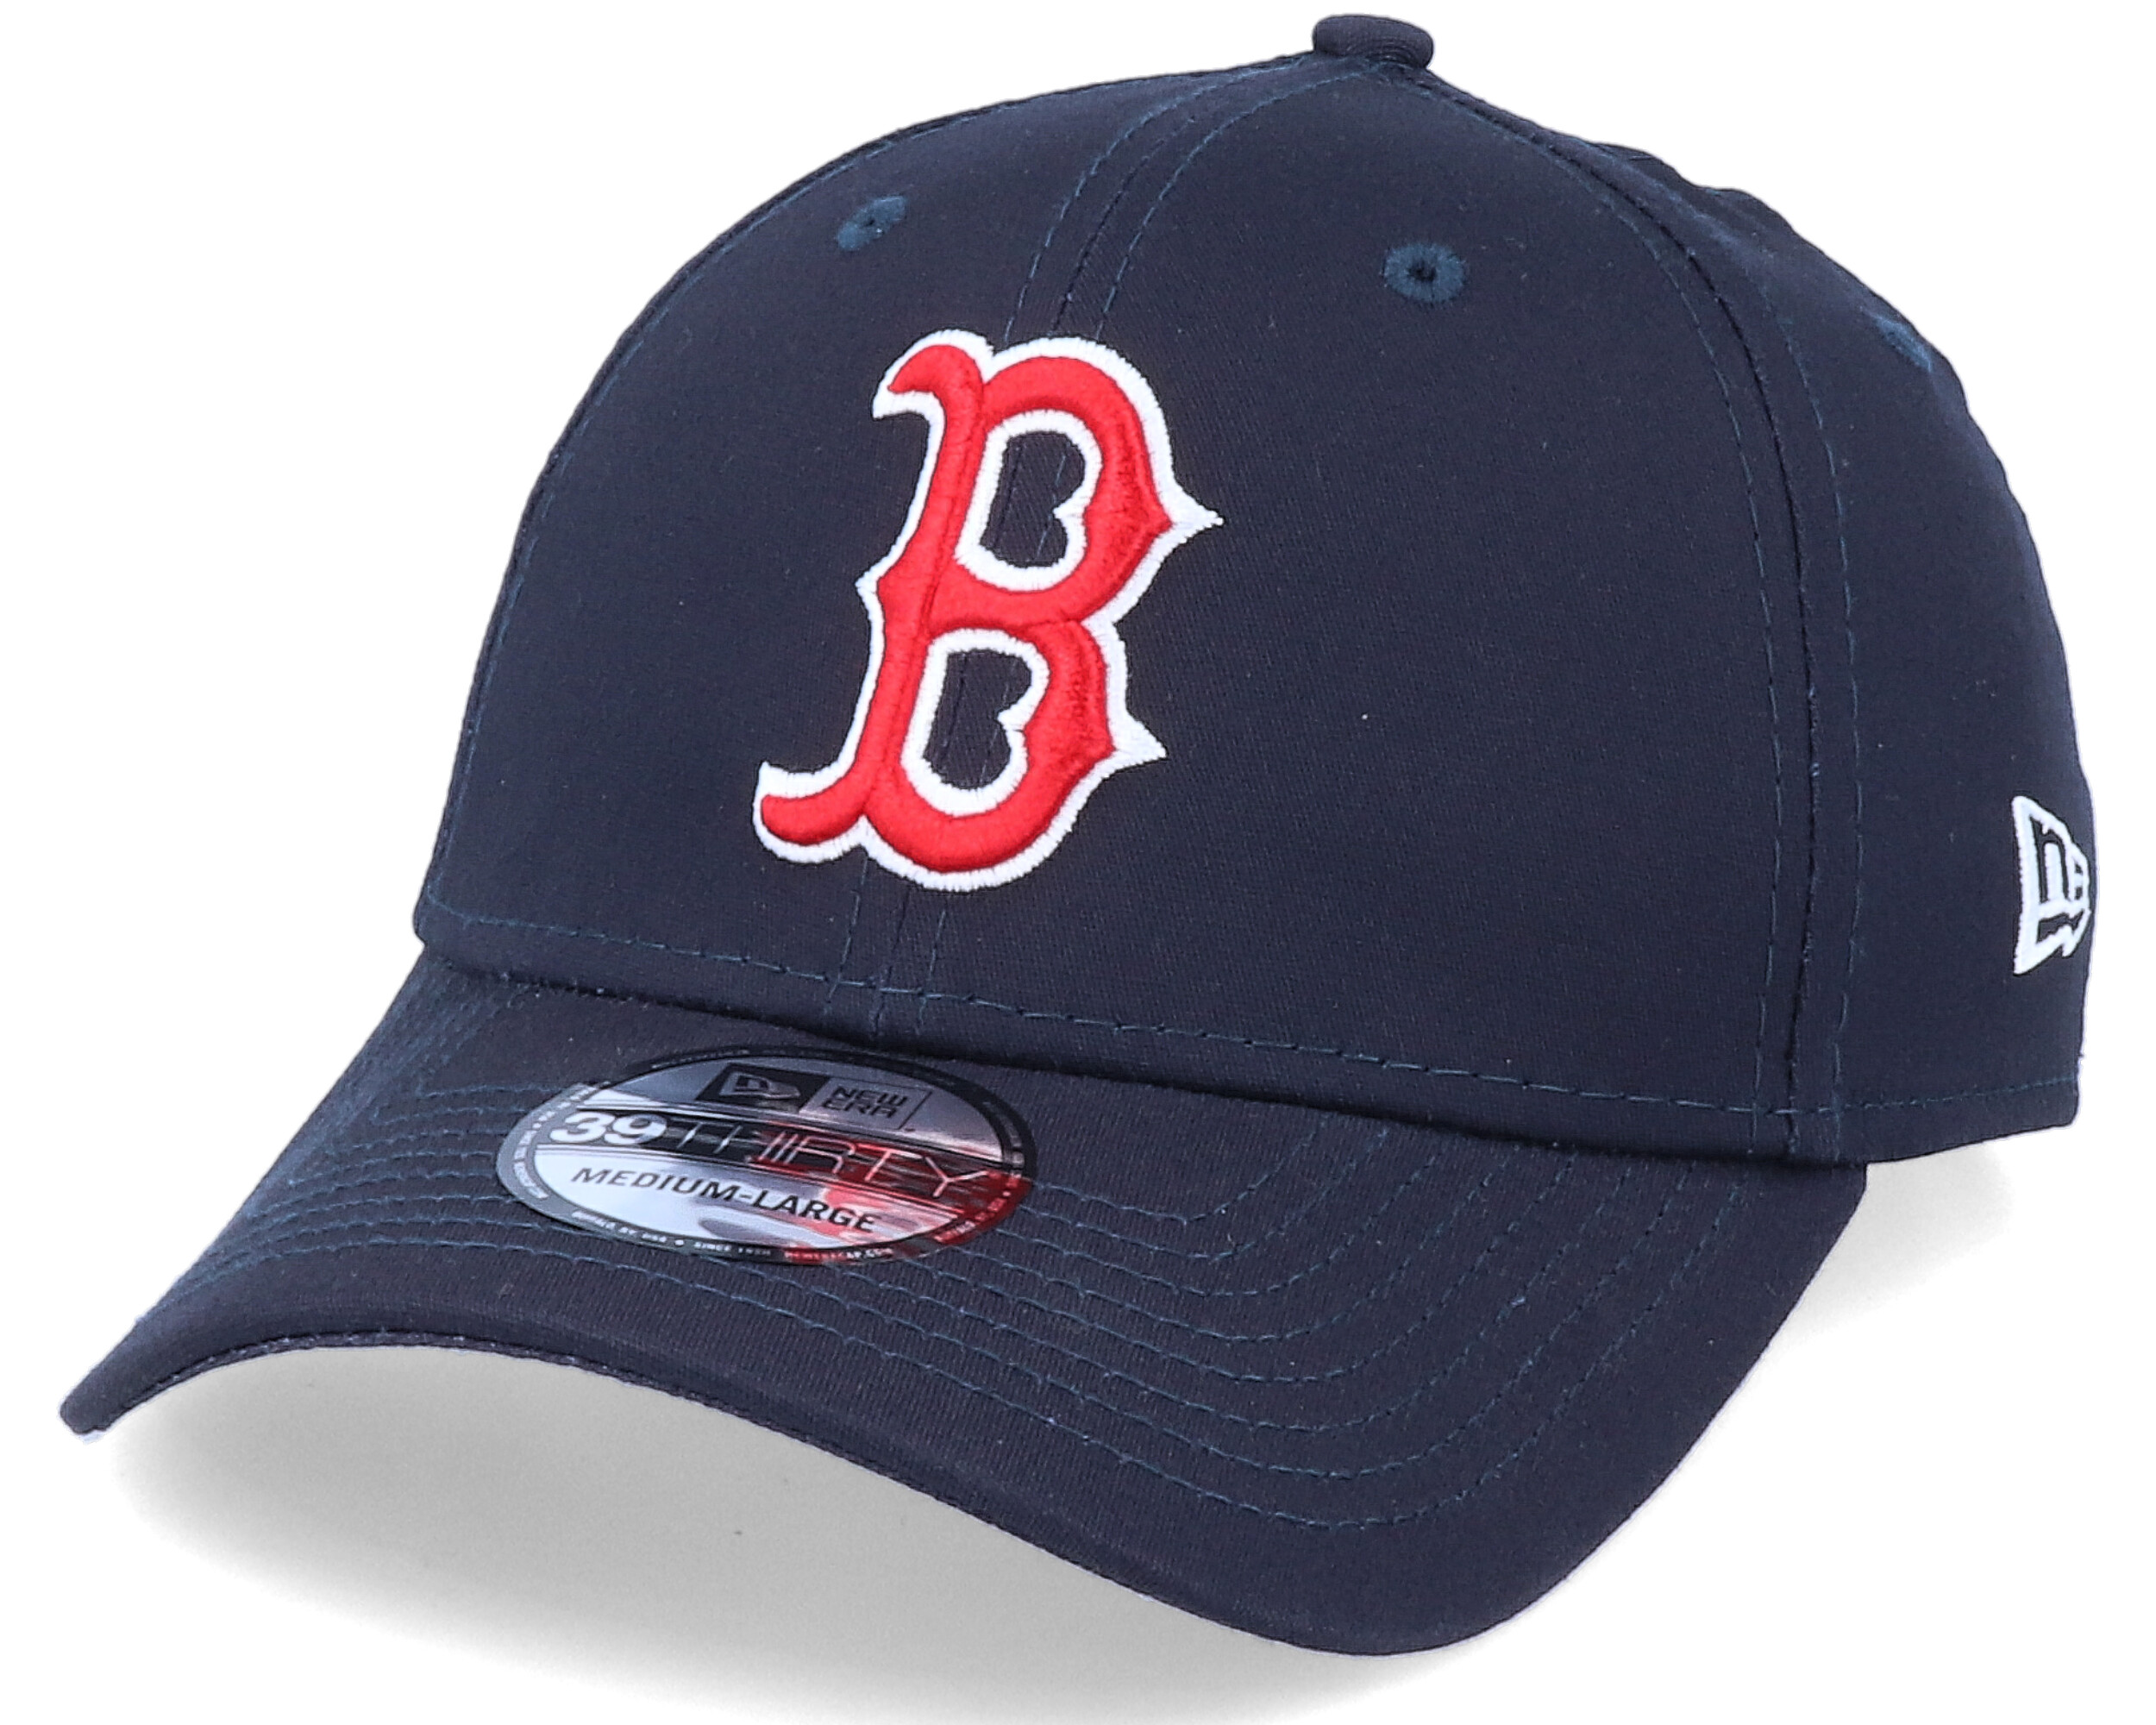 New Era MLB 39Thirty Boston Red Sox cap in navy